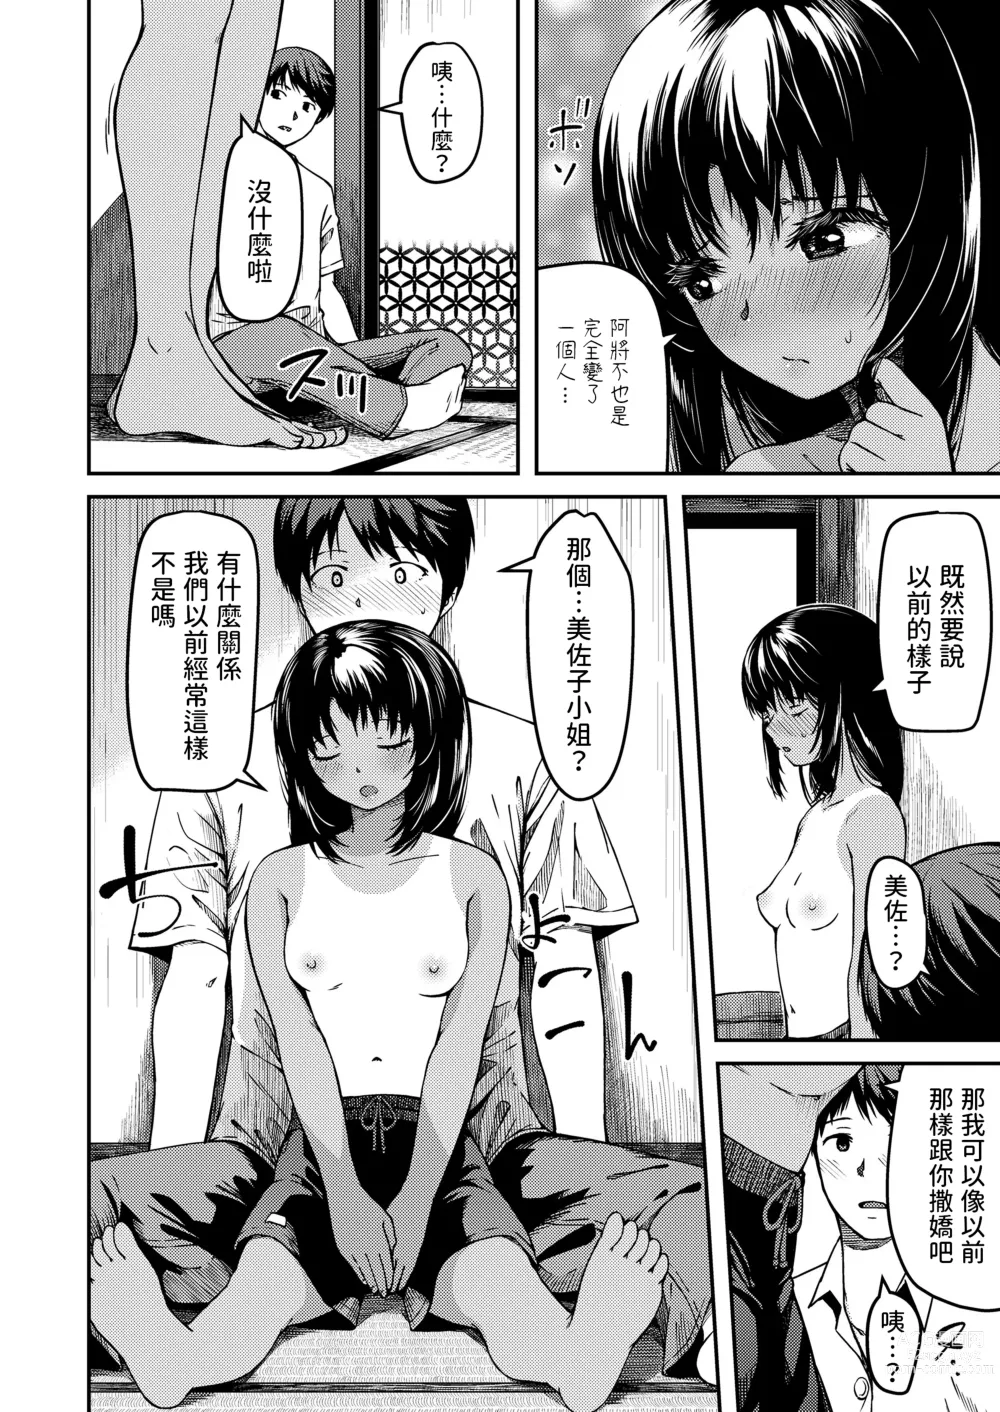 Page 6 of manga Inaka de Hisabisa ni Au Itoko